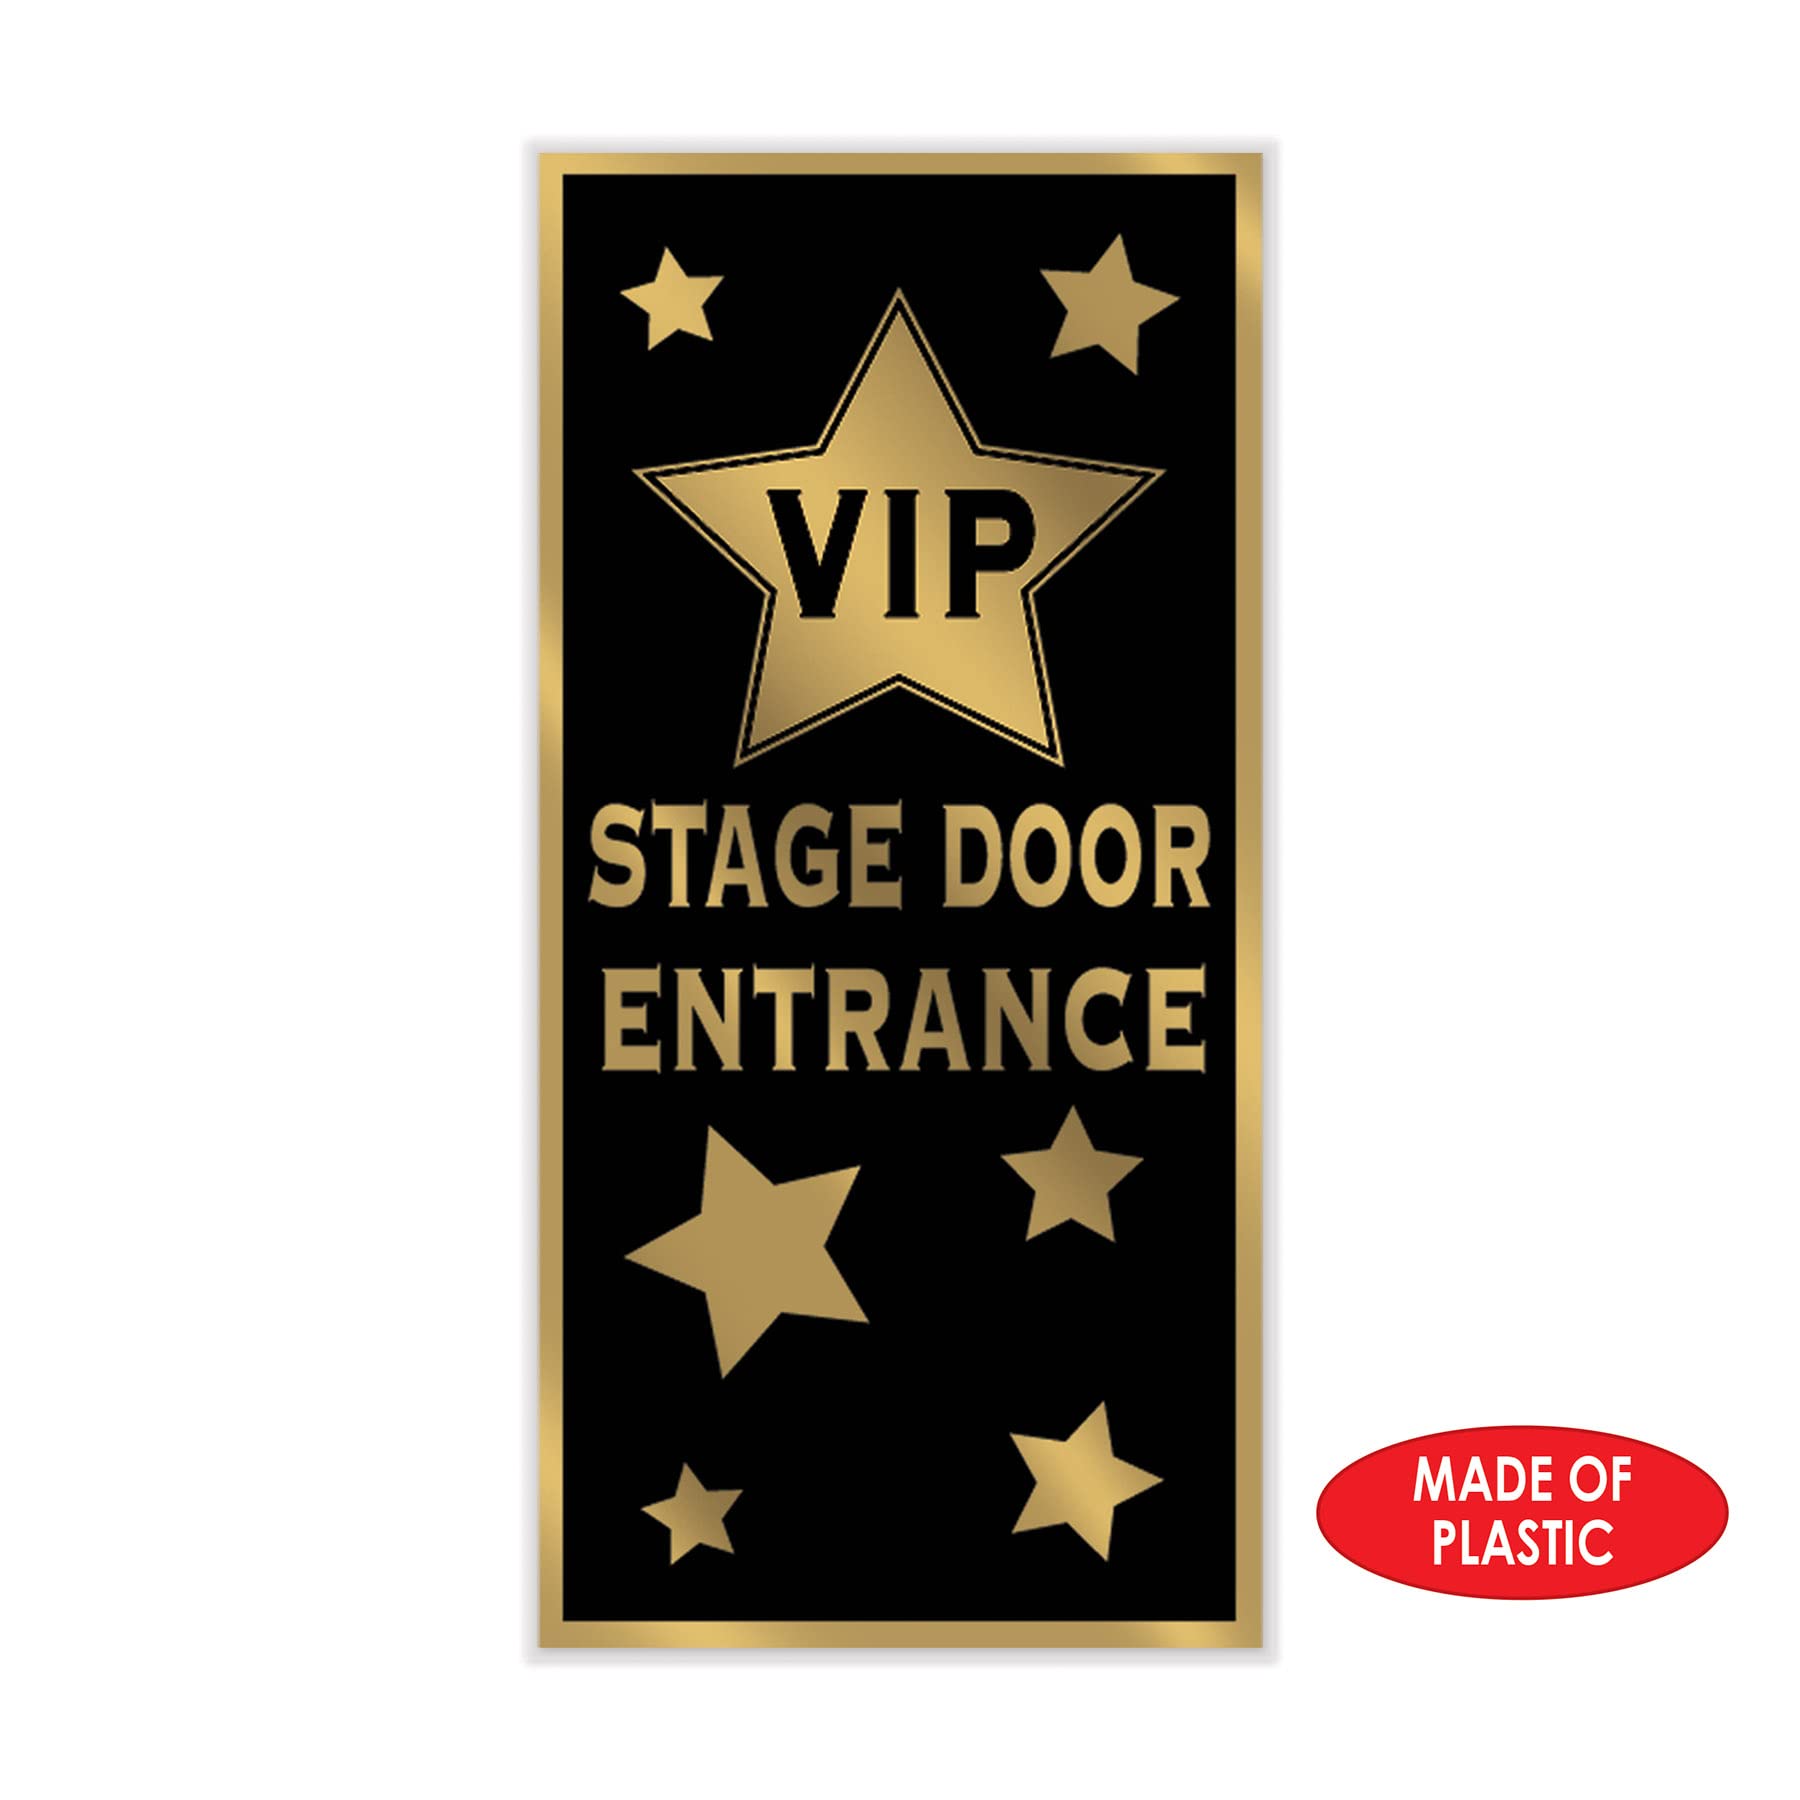 VIP Stage Door Entrance Door Cover Party Accessory (1 count) (1/Pkg)